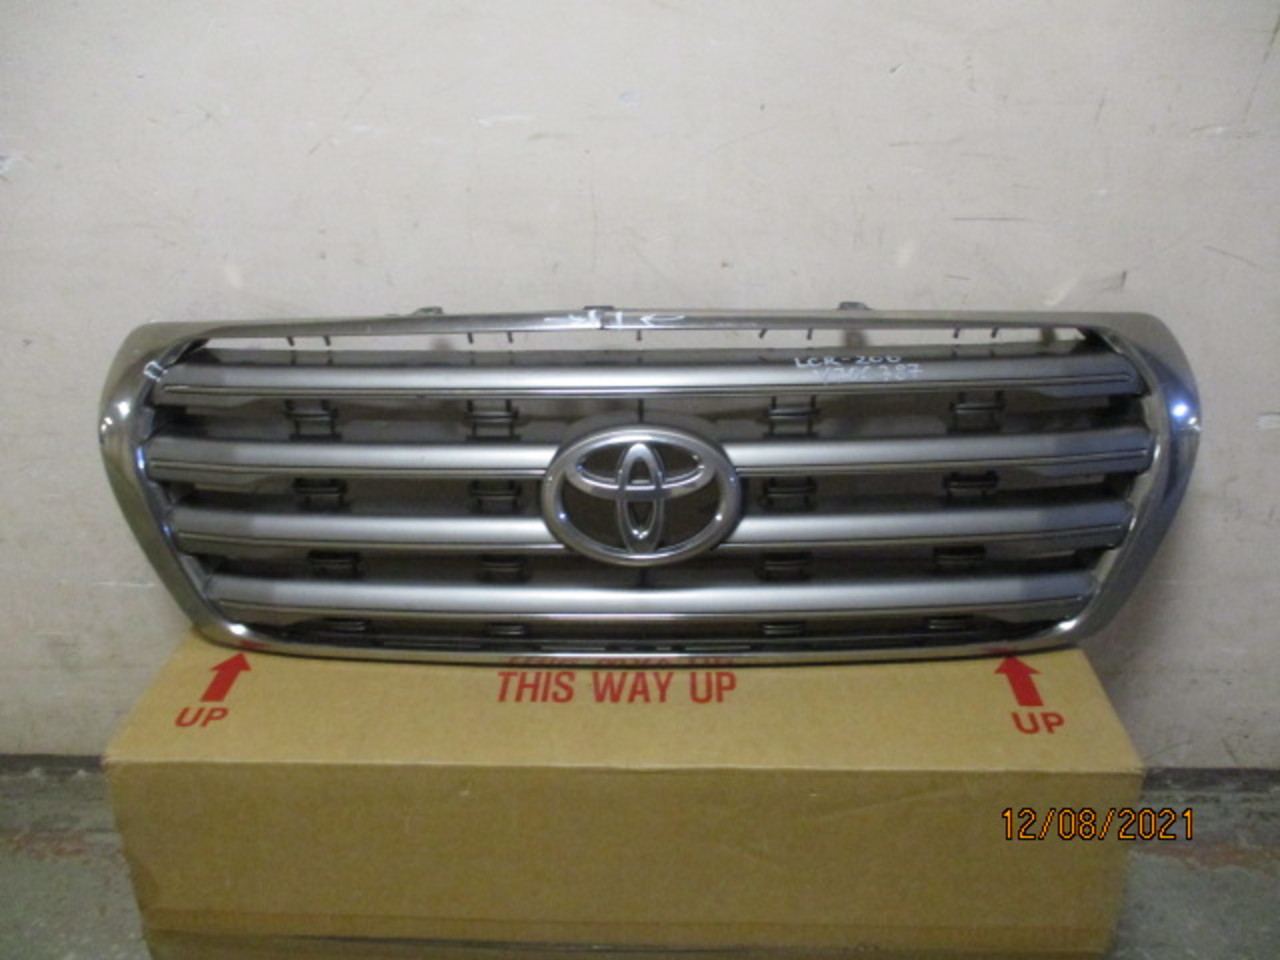 Решетка радиатора на Toyota Land Cruiser (200) 2008>